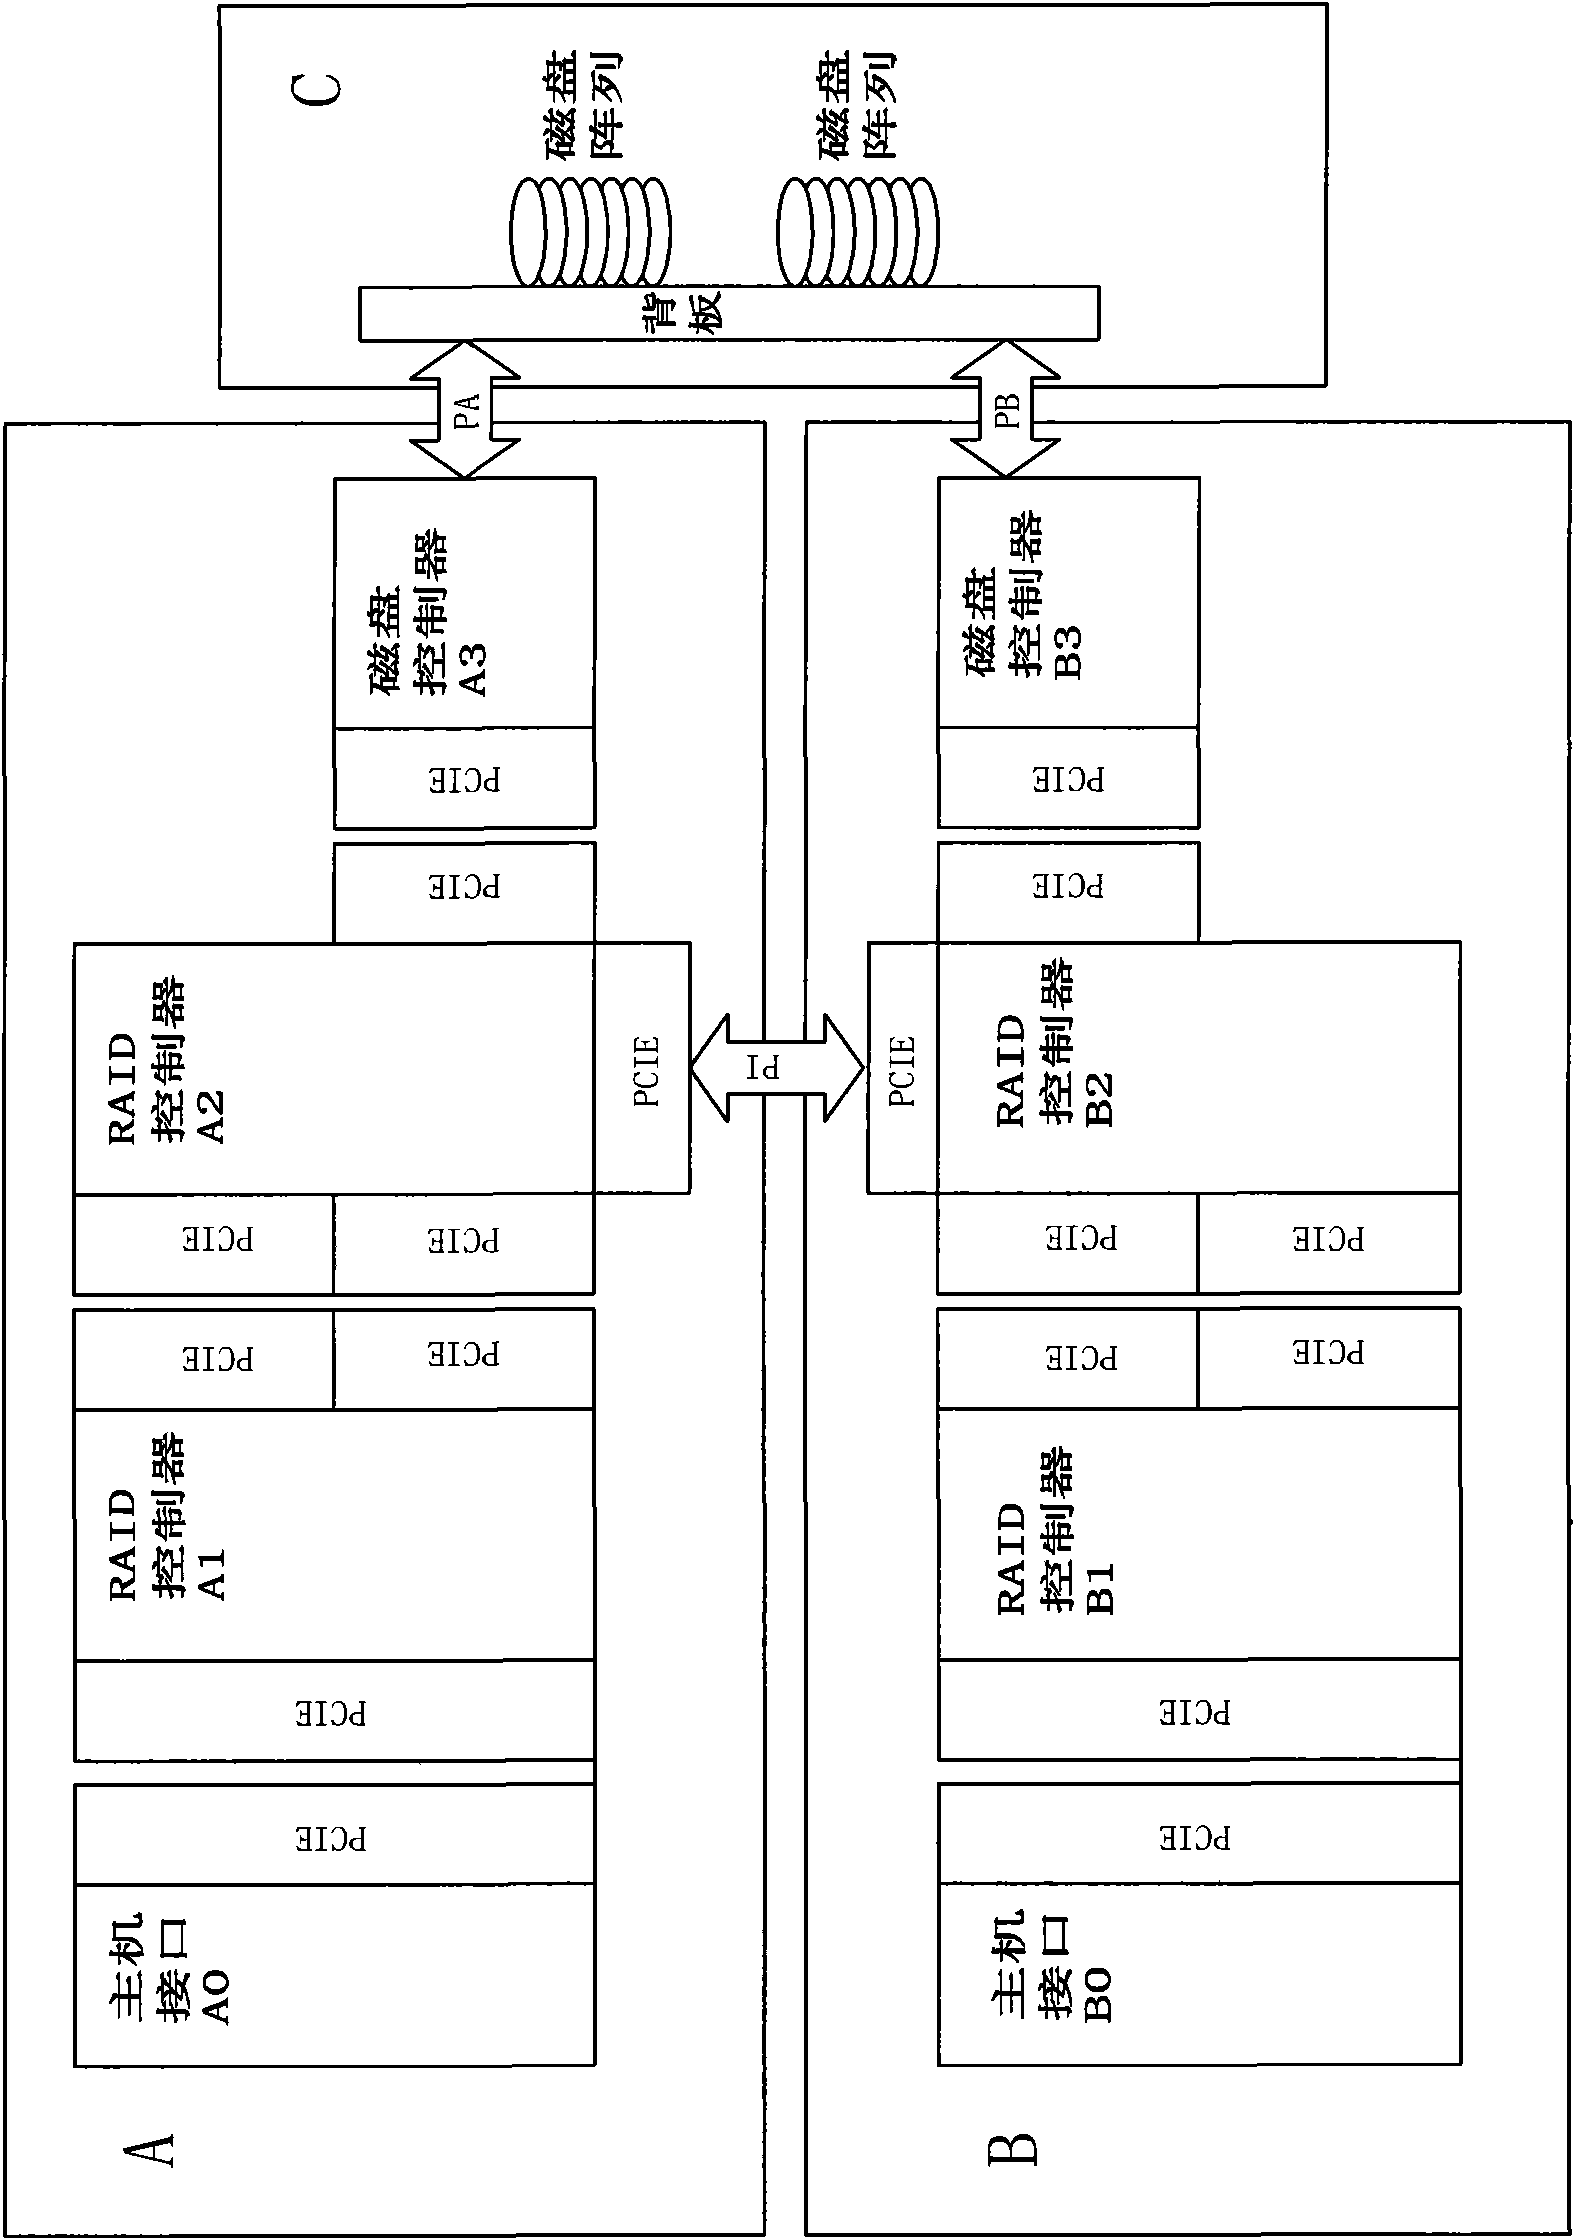 Parallel processing-based multi-host interface redundancy SAN controller